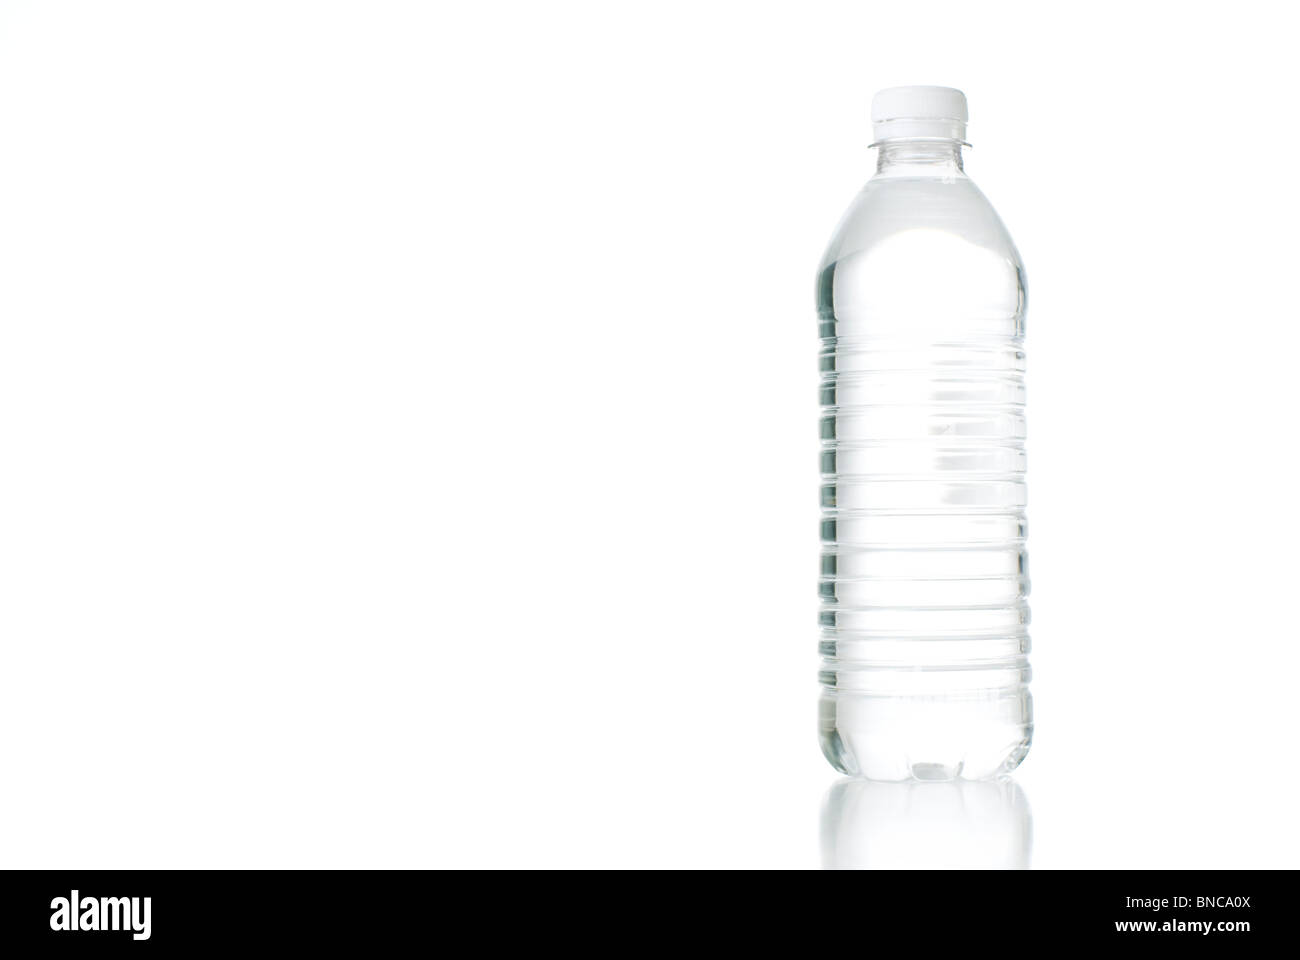 https://c8.alamy.com/comp/BNCA0X/a-clear-plastic-water-bottle-on-white-background-BNCA0X.jpg